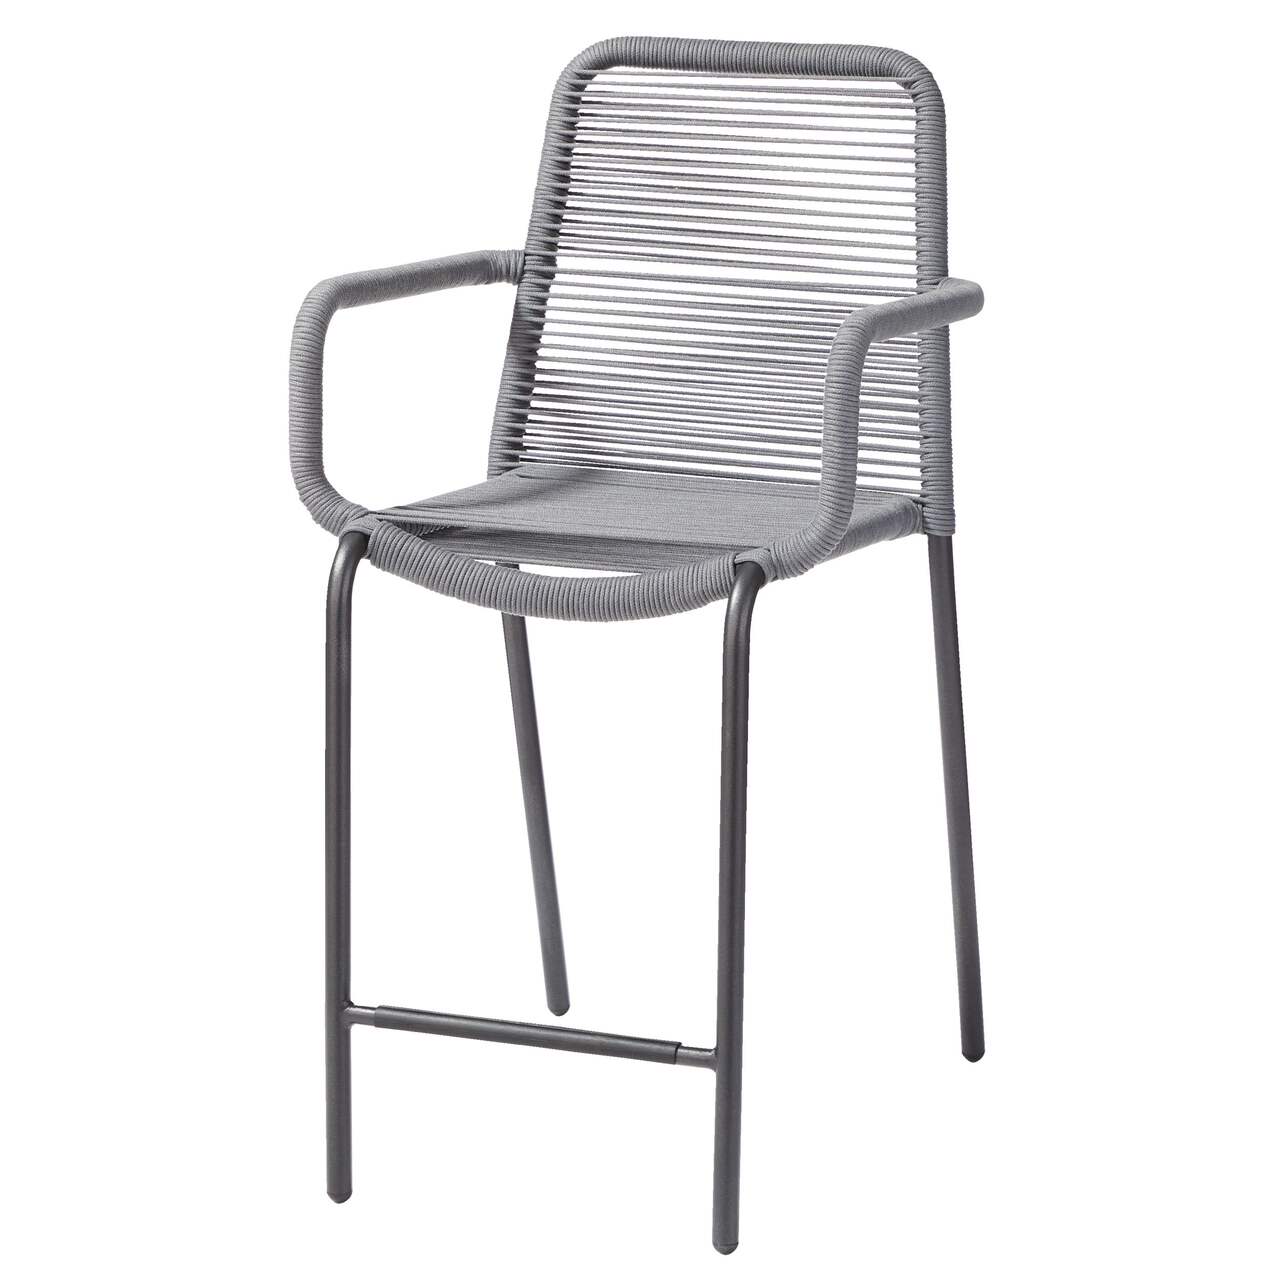 CANVAS Mercier Steel Rope Outdoor/Patio/Balcony Height Chair